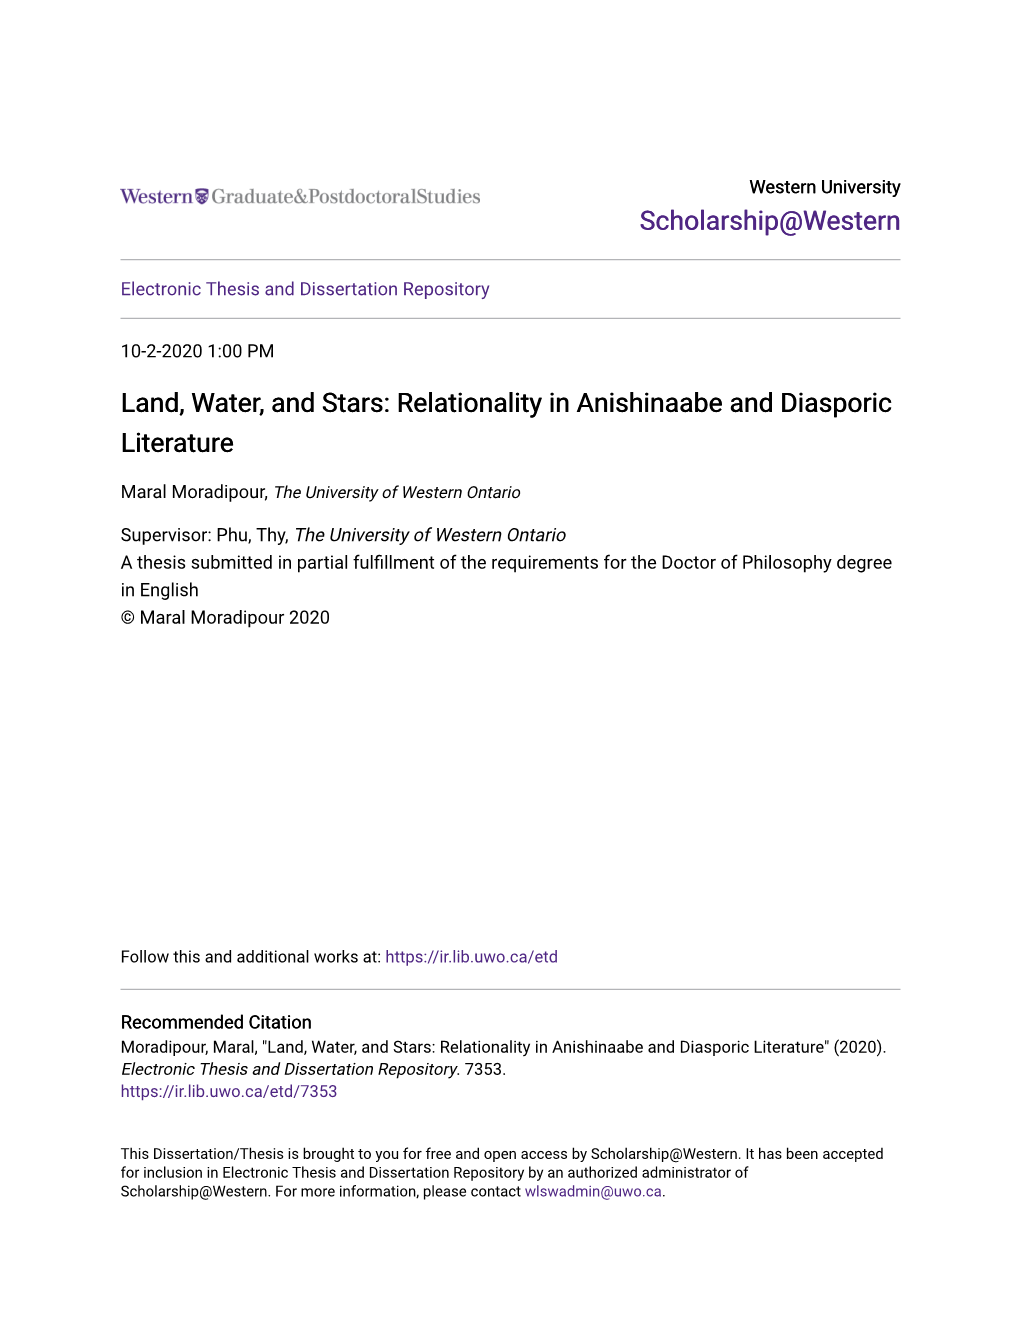 Land, Water, and Stars: Relationality in Anishinaabe and Diasporic Literature